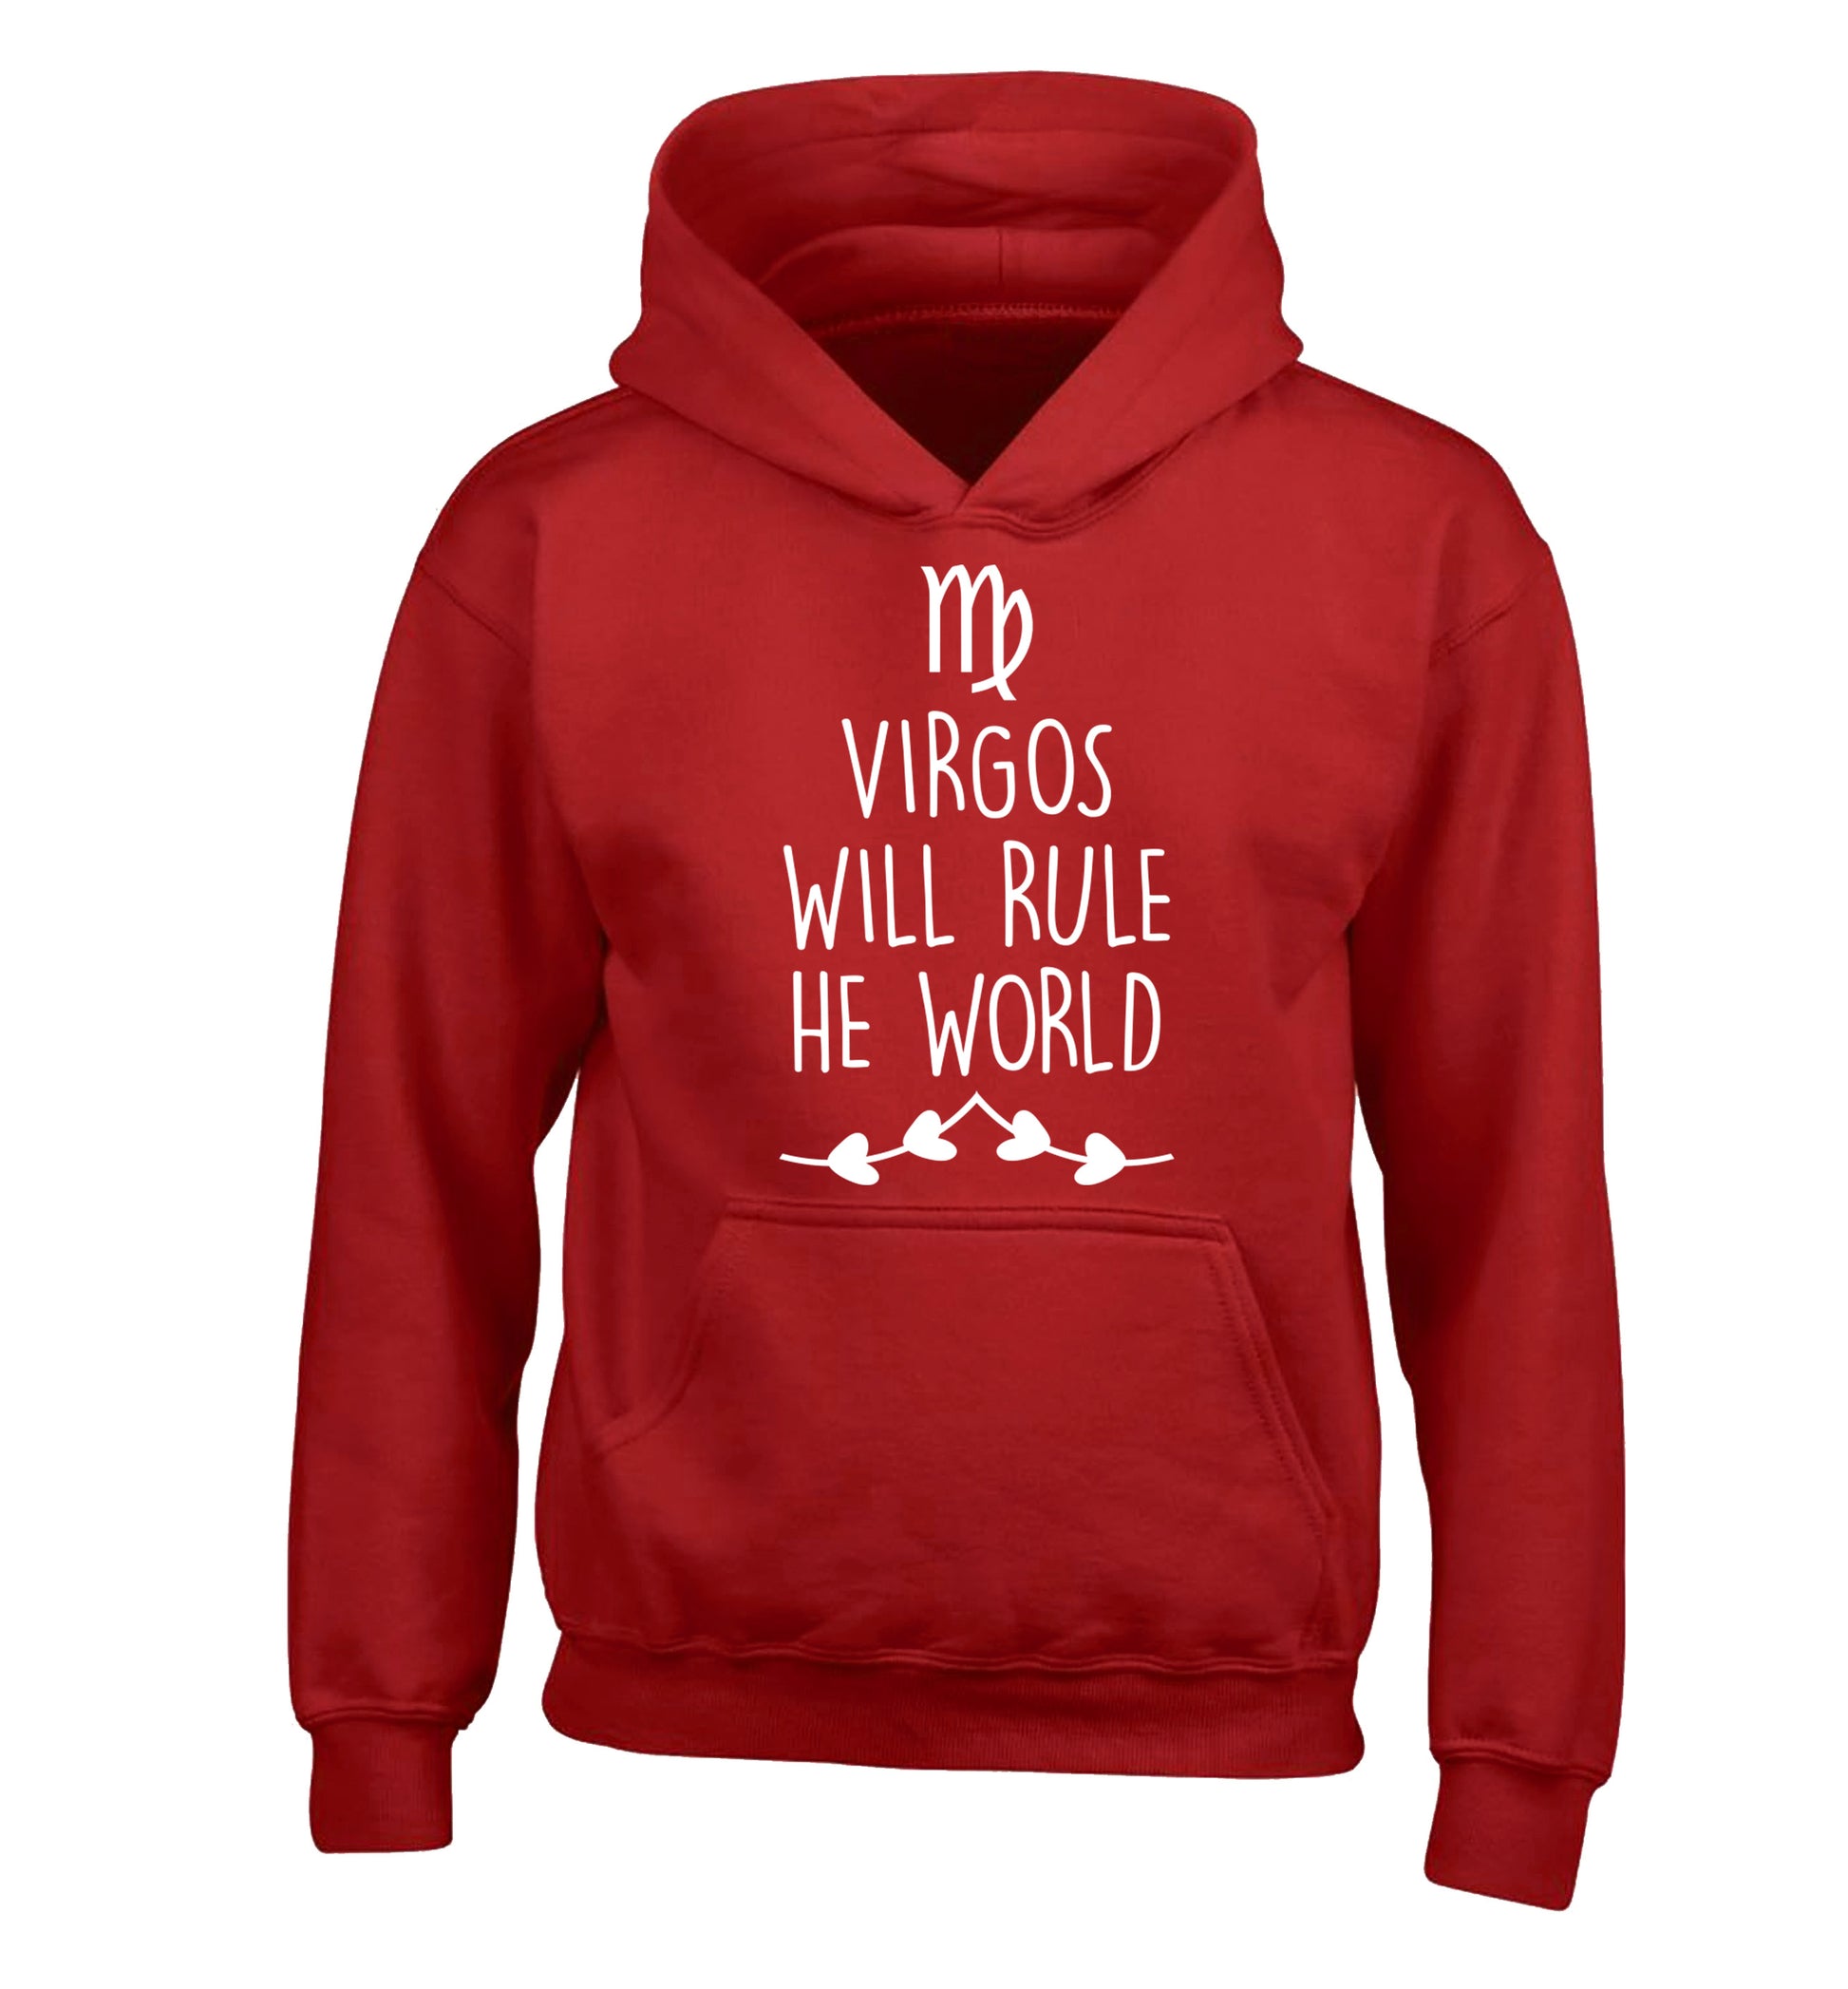 Virgos will rule the world children's red hoodie 12-13 Years